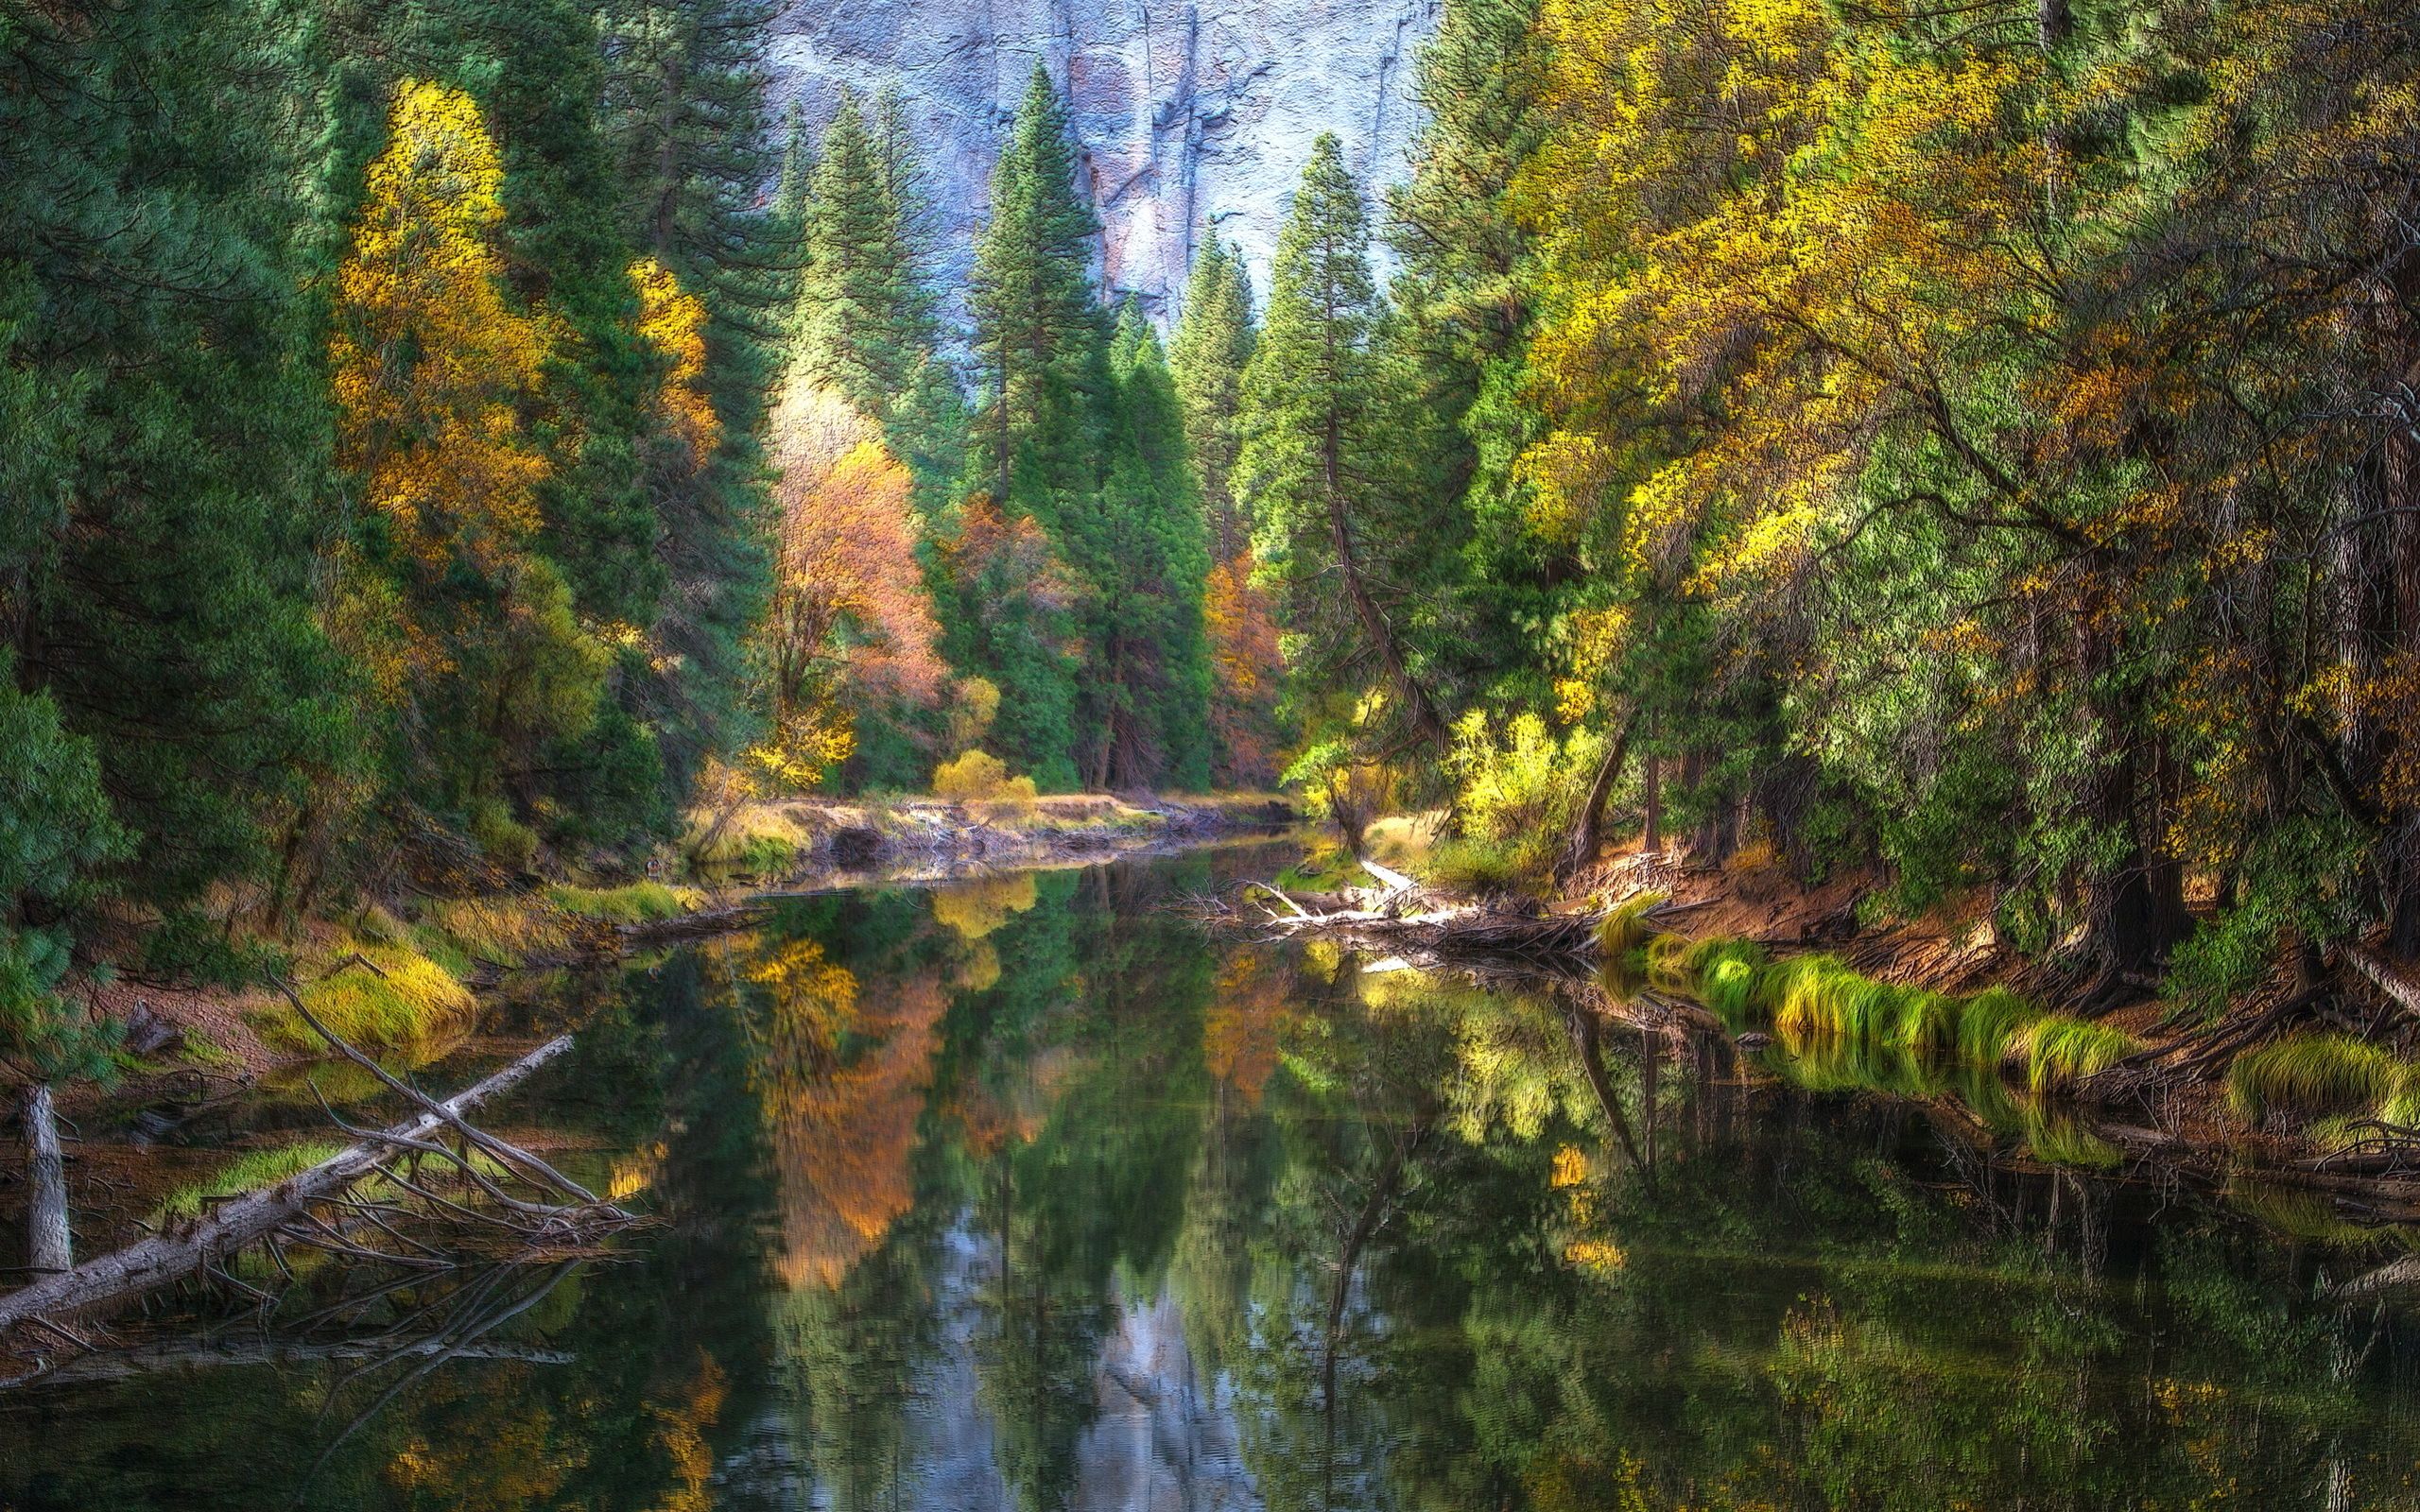 Yosemite National Park Wallpaper. Apple Yosemite Wallpaper, MacBook Yosemite Wallpaper and Yosemite Wallpaper